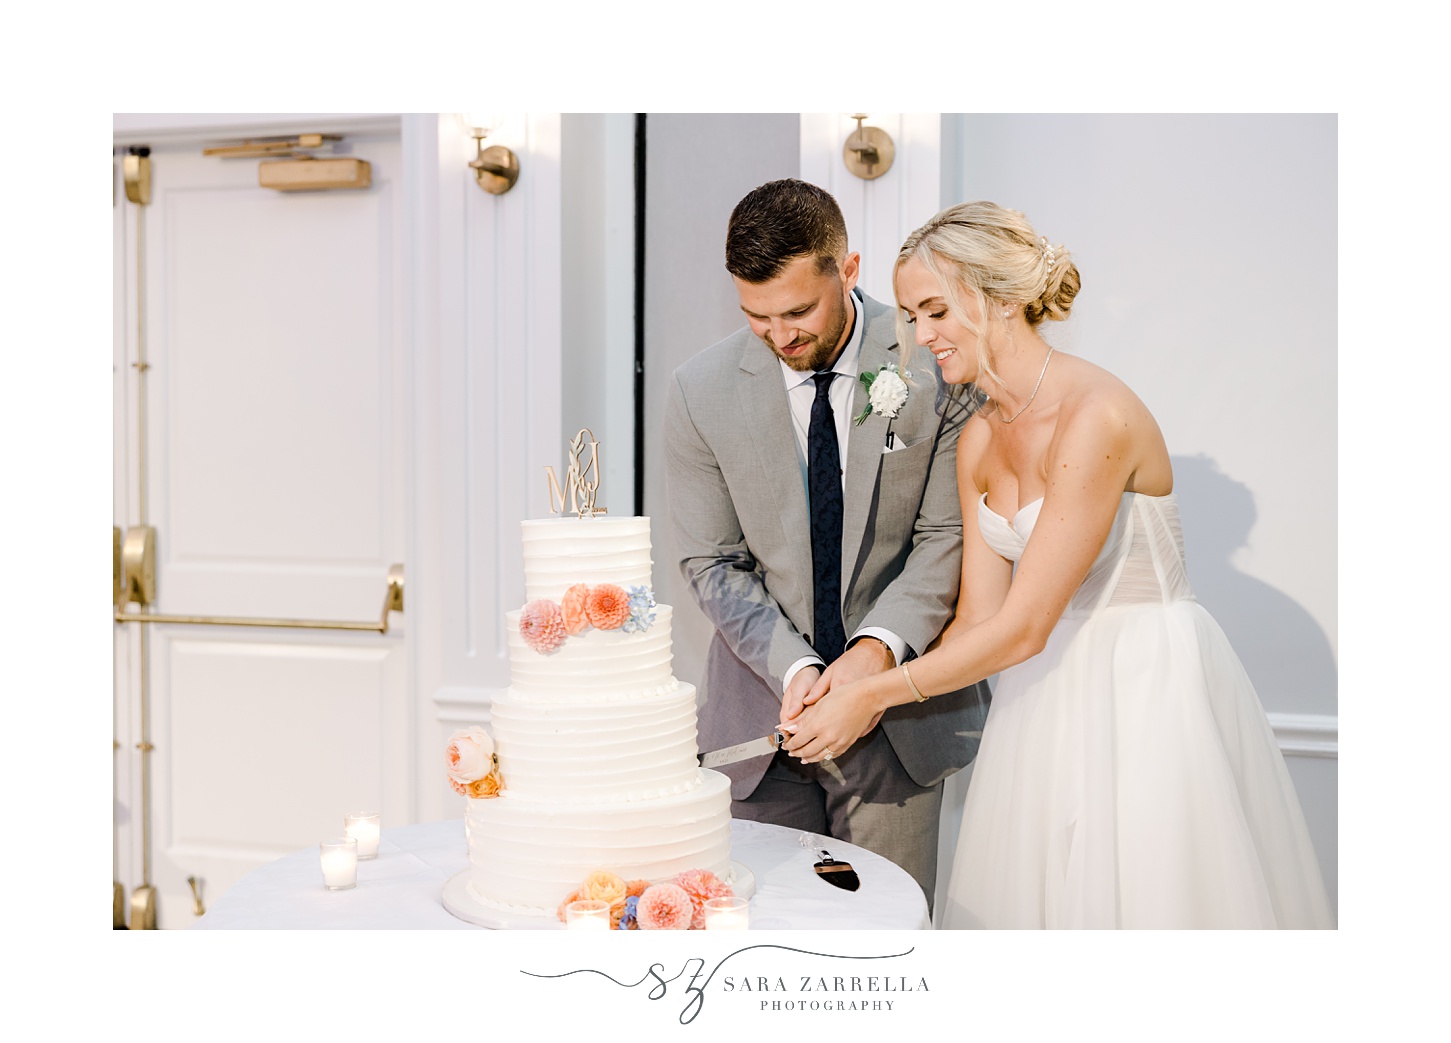 bride and groom cut tiered wedding cake during wedding reception at Newport Harbor Island Resort